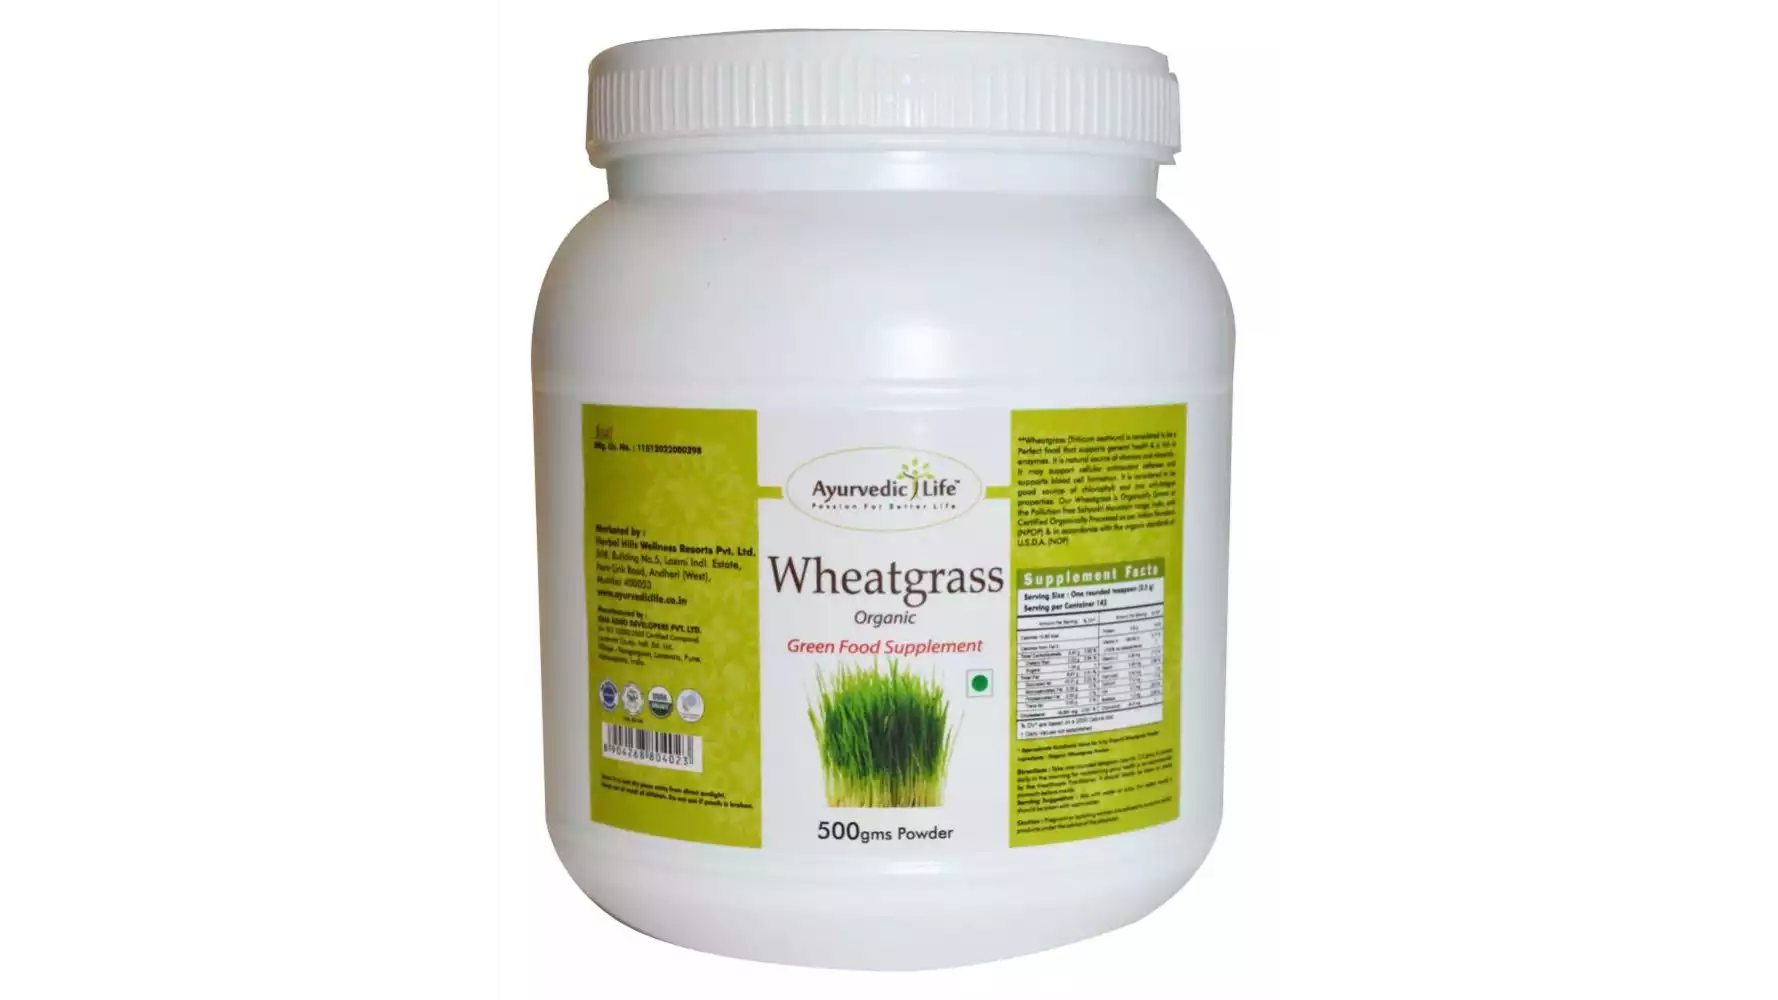 Ayurvedic Life Wheatgrass Powder (500g)